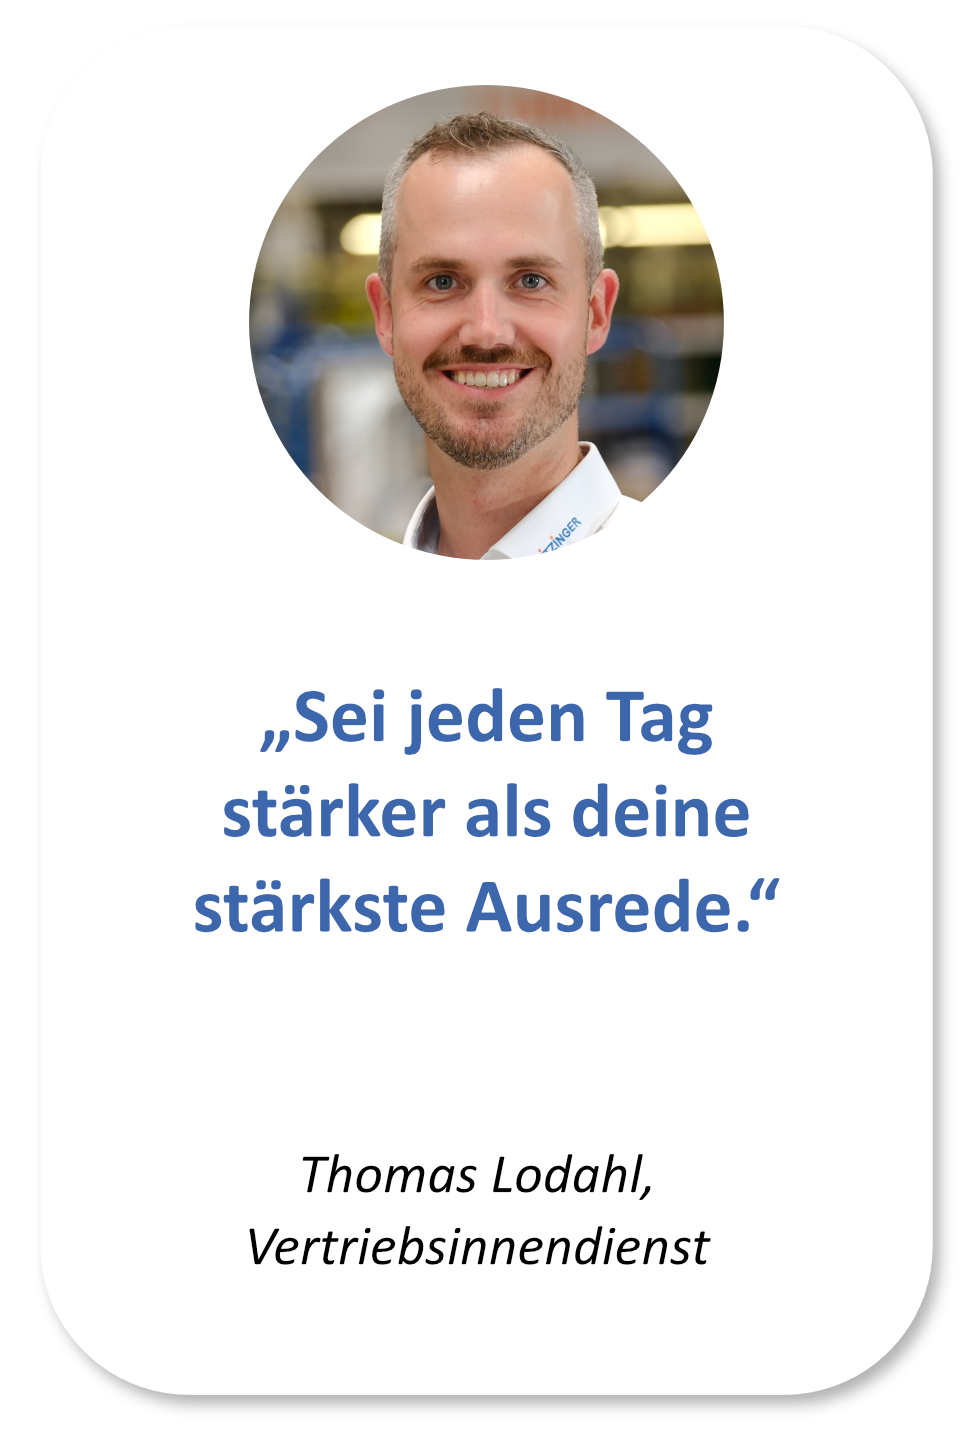 Thomas Lodahl